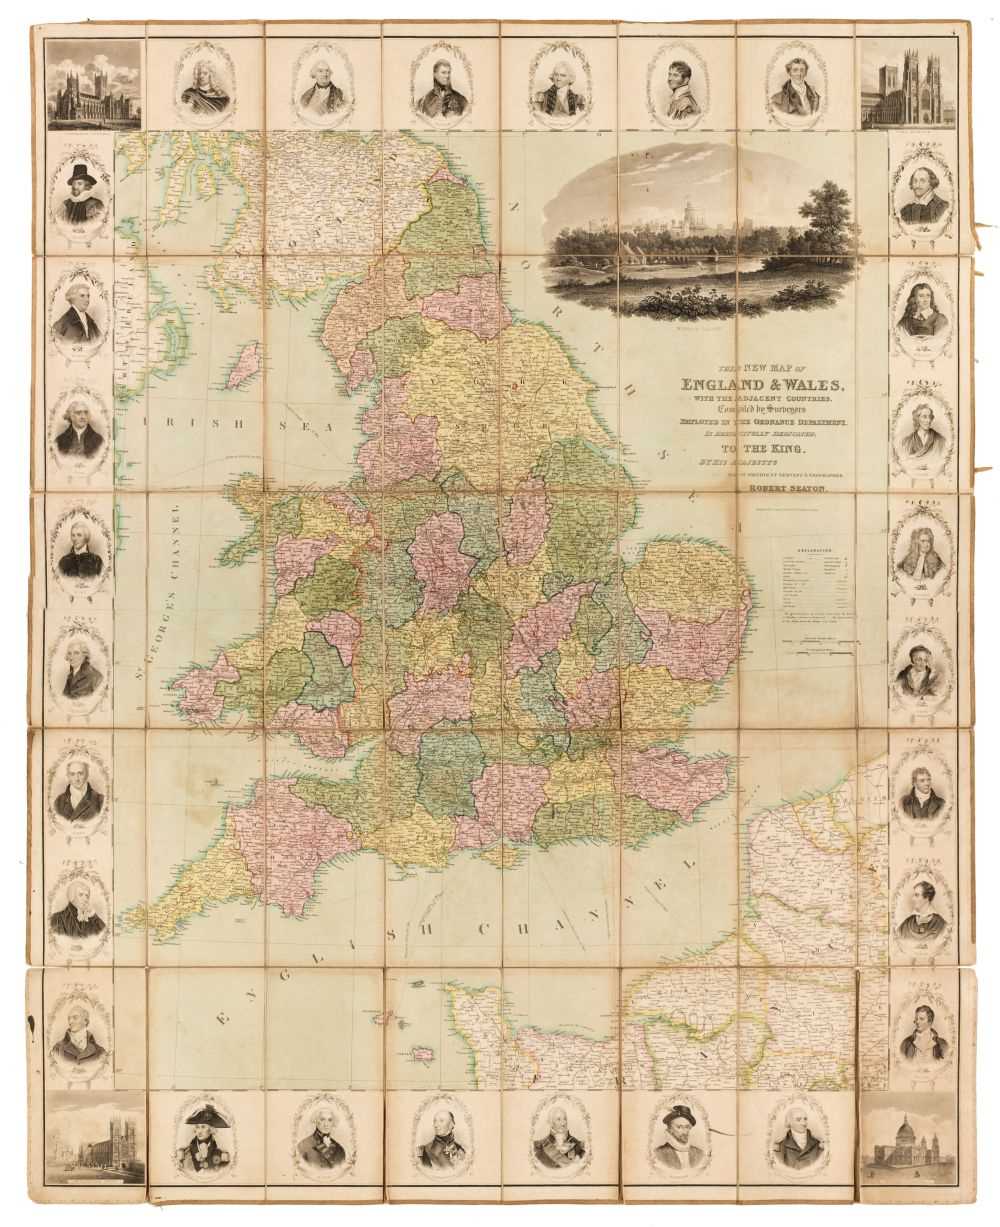 Lot 162 - England & Wales. Seaton (Robert), This New Map of England & Wales..., circa 1835